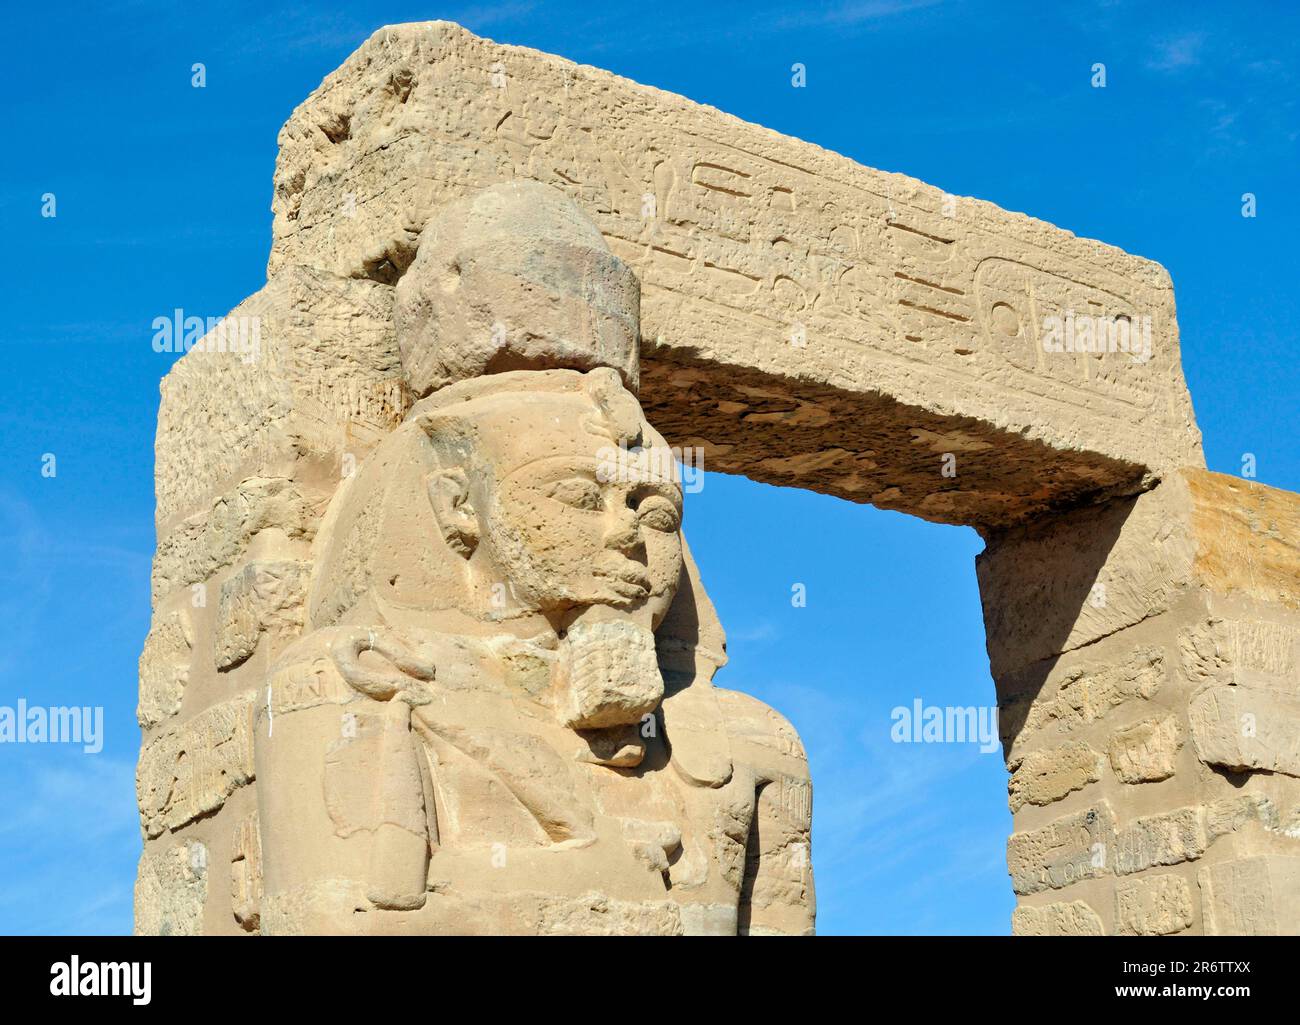 Statue of Ramses II the Great, courtyard, ancient Nubian Gerf Hussein Temple, Kalabsha Island, near Aswan Dam, Lake Nasser, Egypt Stock Photo